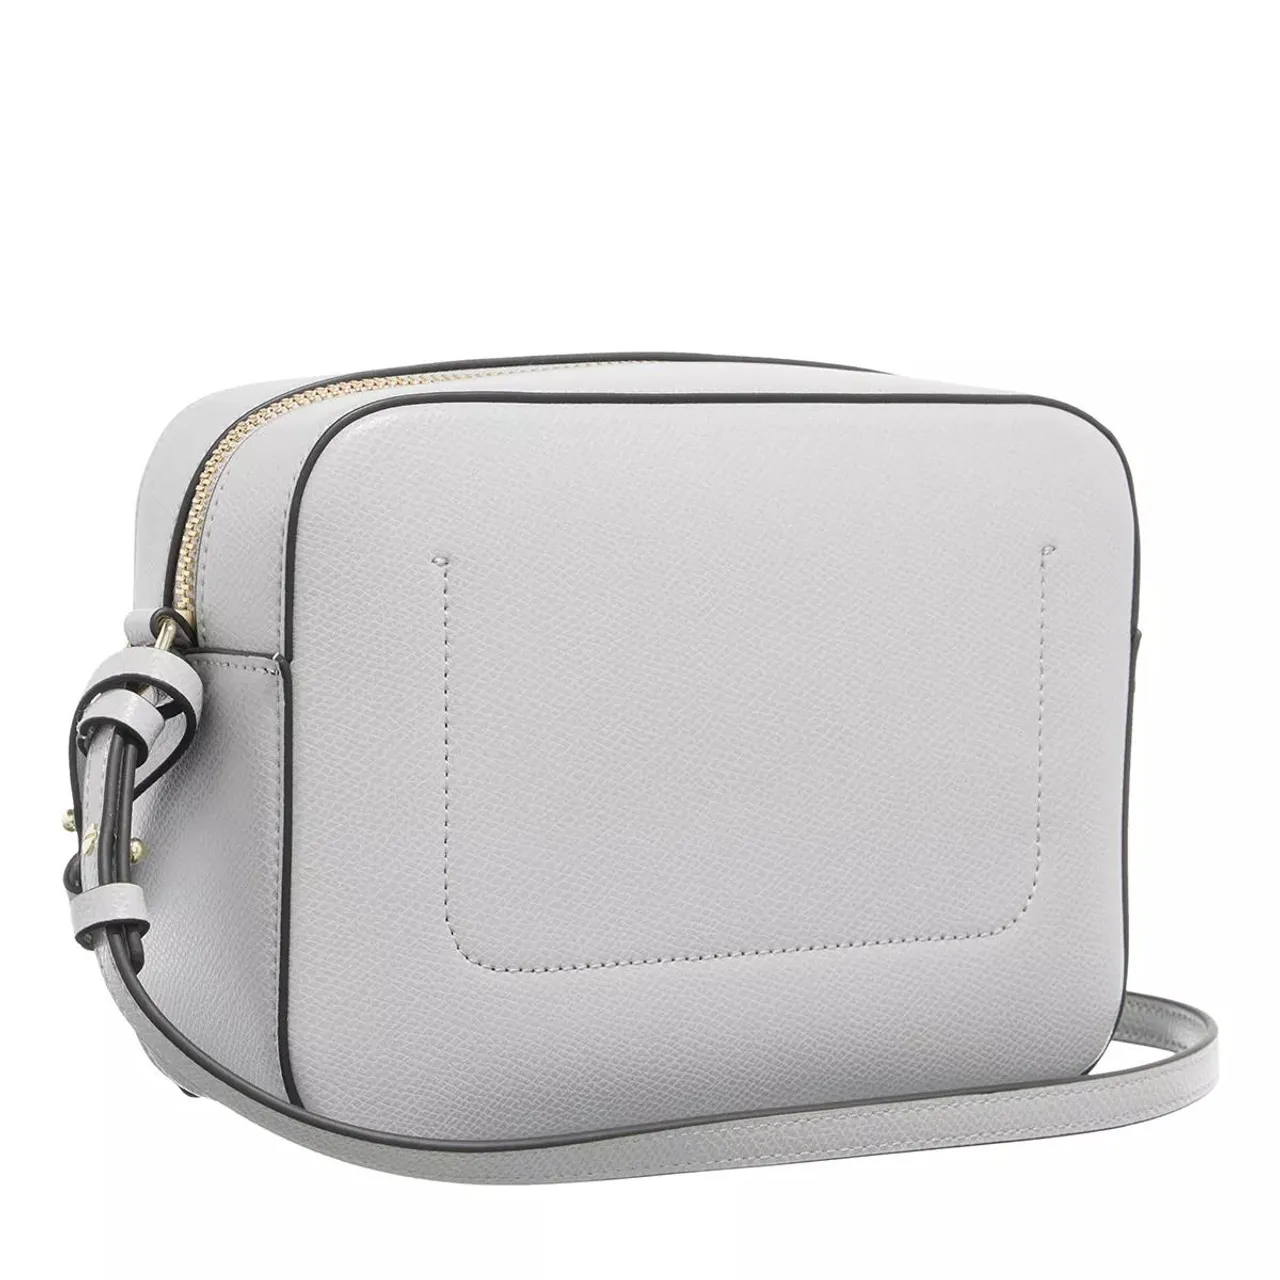 Emporio Armani Crossbody Bags - Borsa A Tracolla - grey - Crossbody Bags for ladies